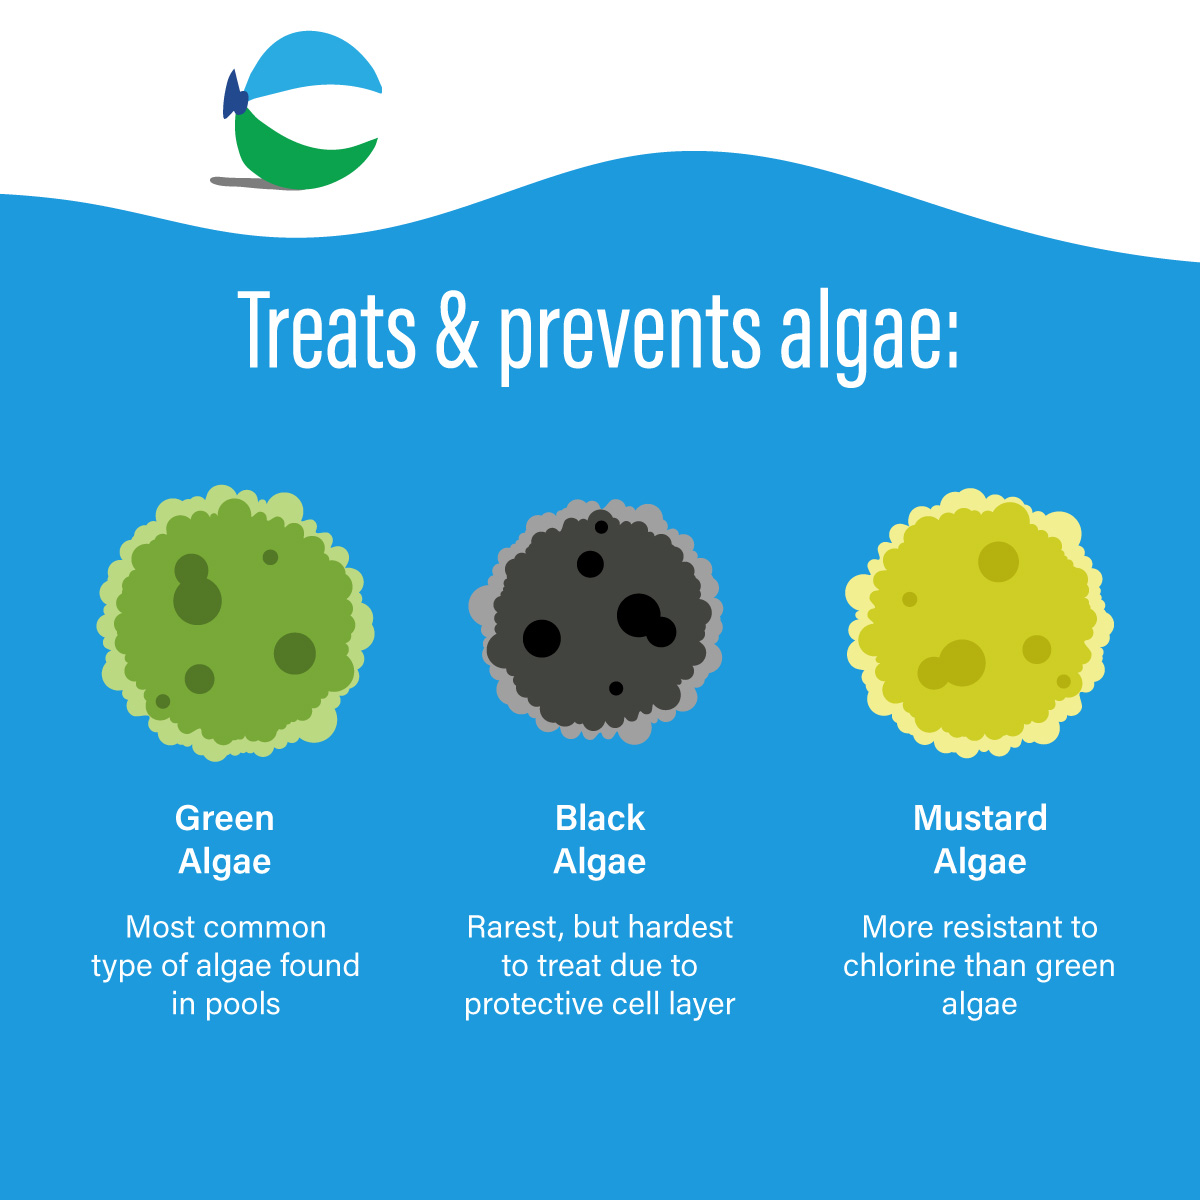 Icons that visually convey algae-free pool water after usage. Icons of Green Algae, Black Algae, and Mustard Algae